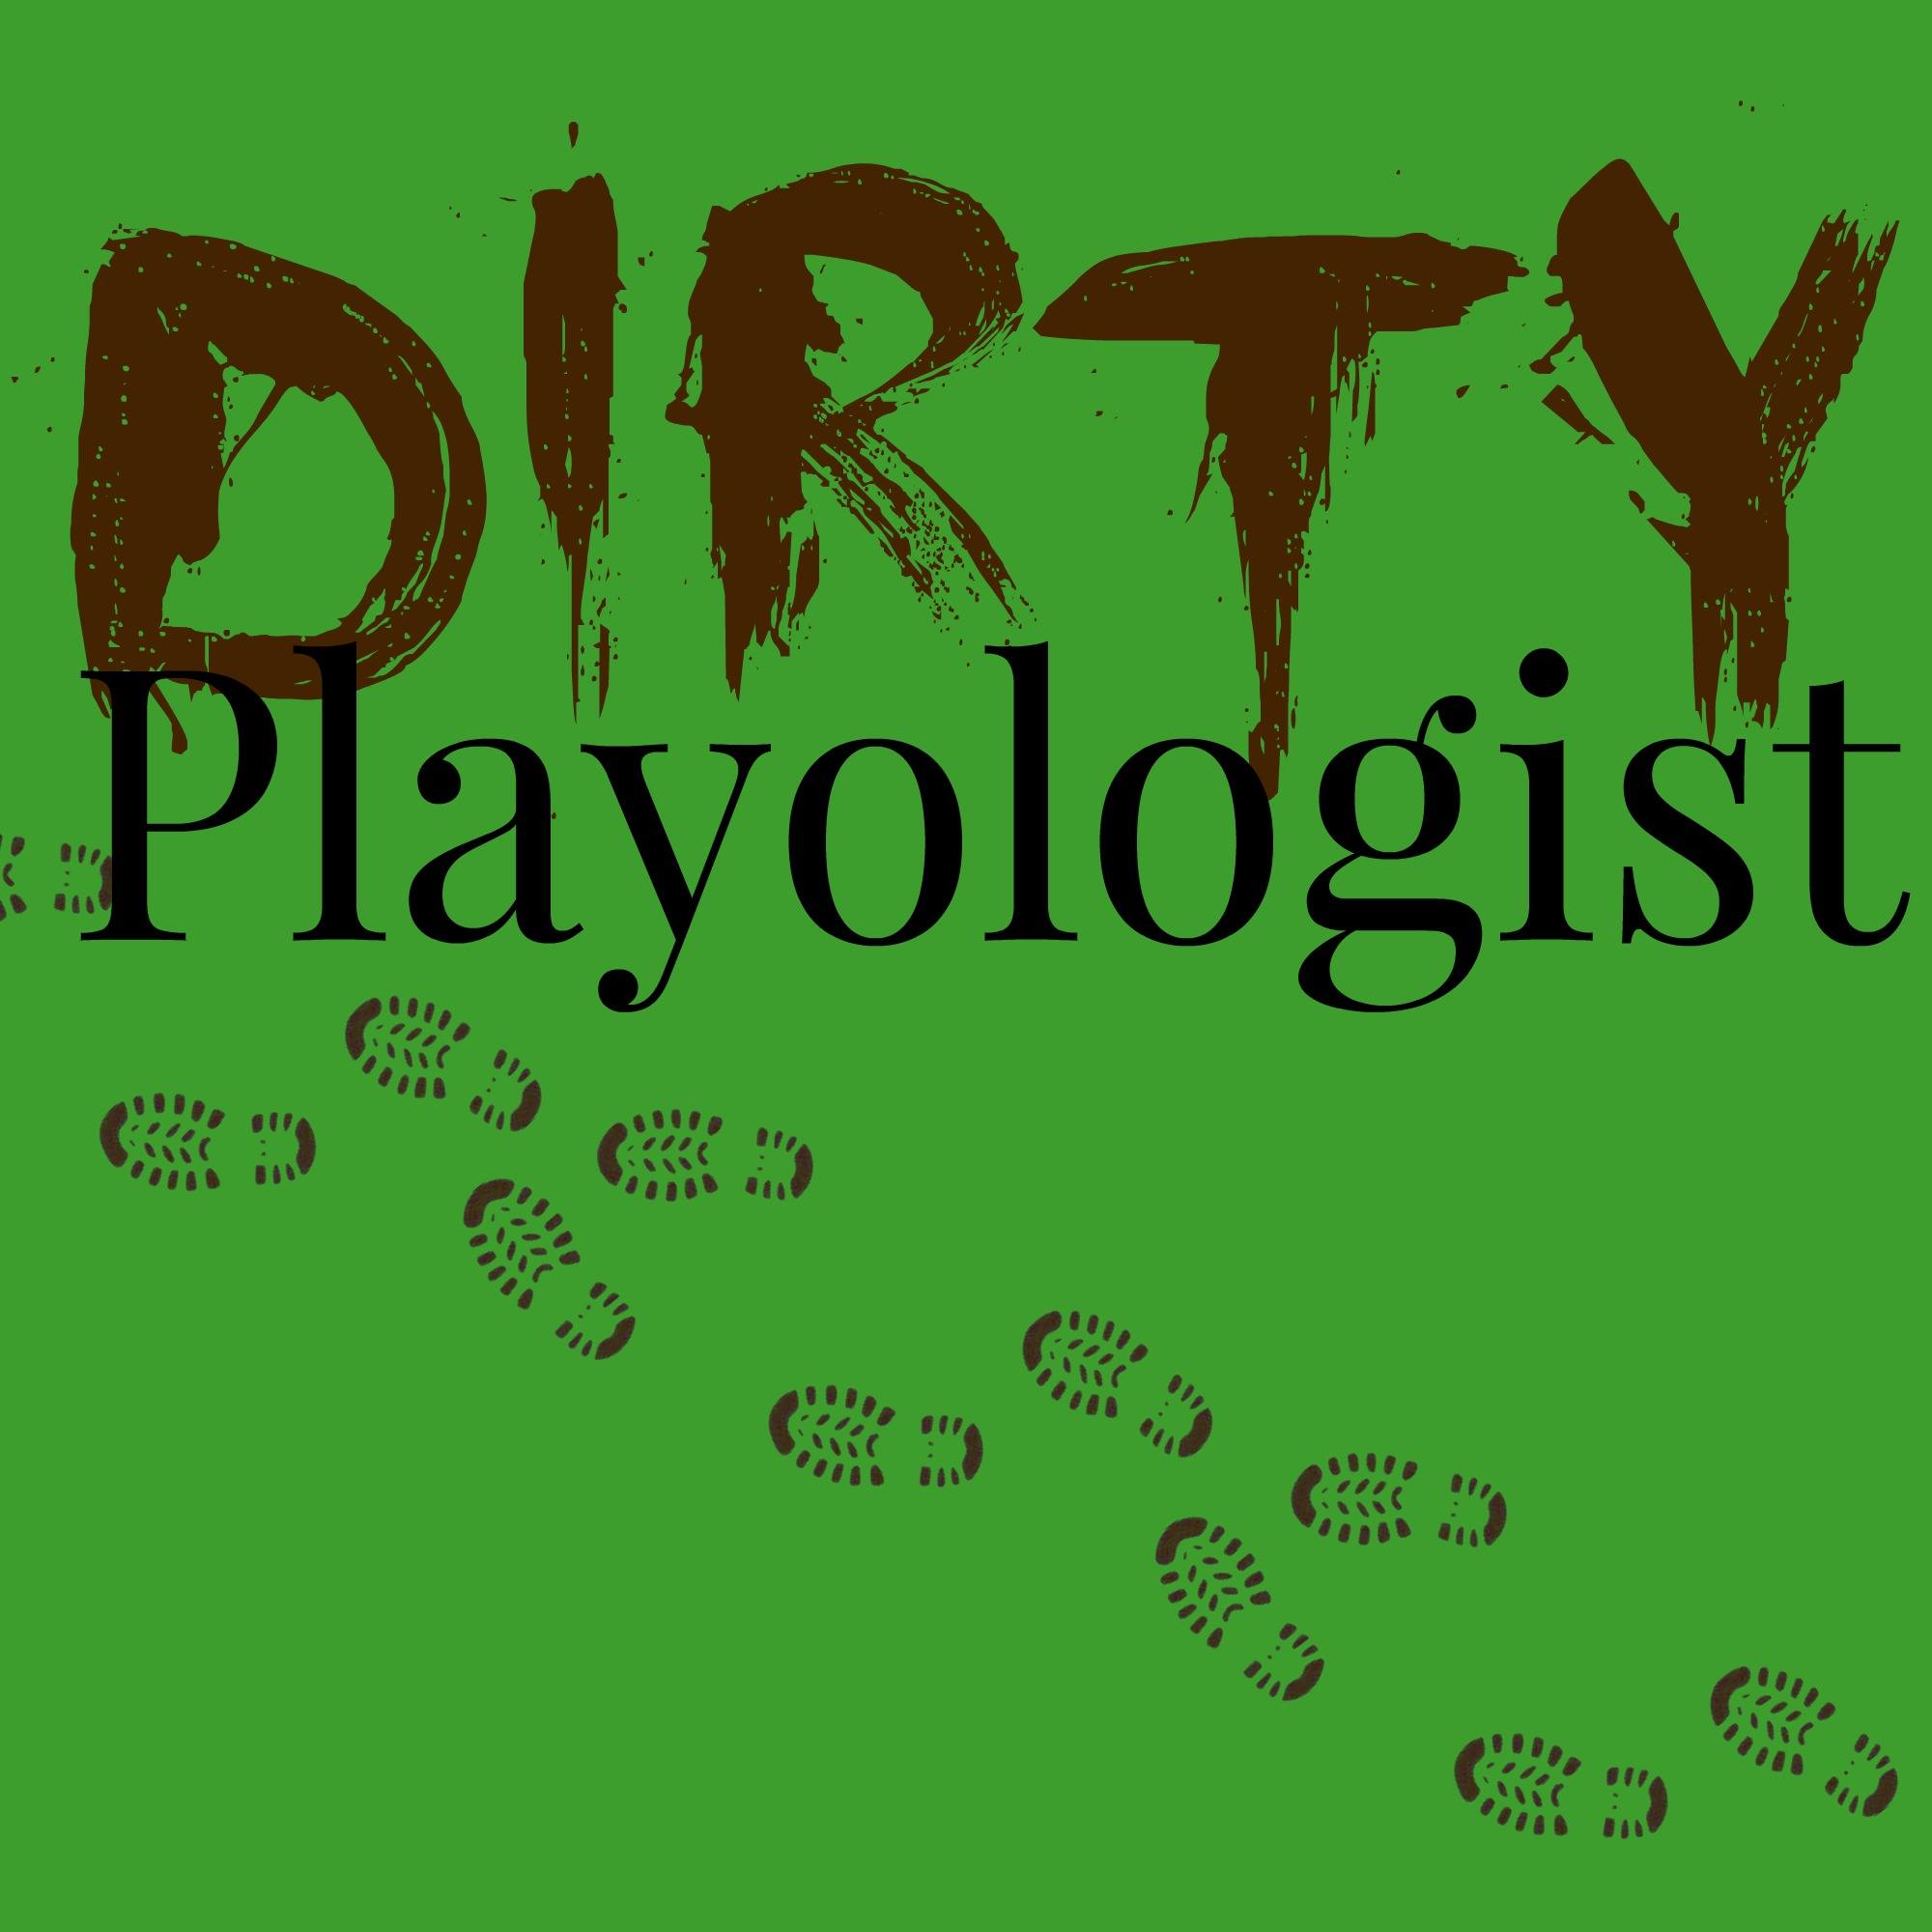 Dirty Playologist